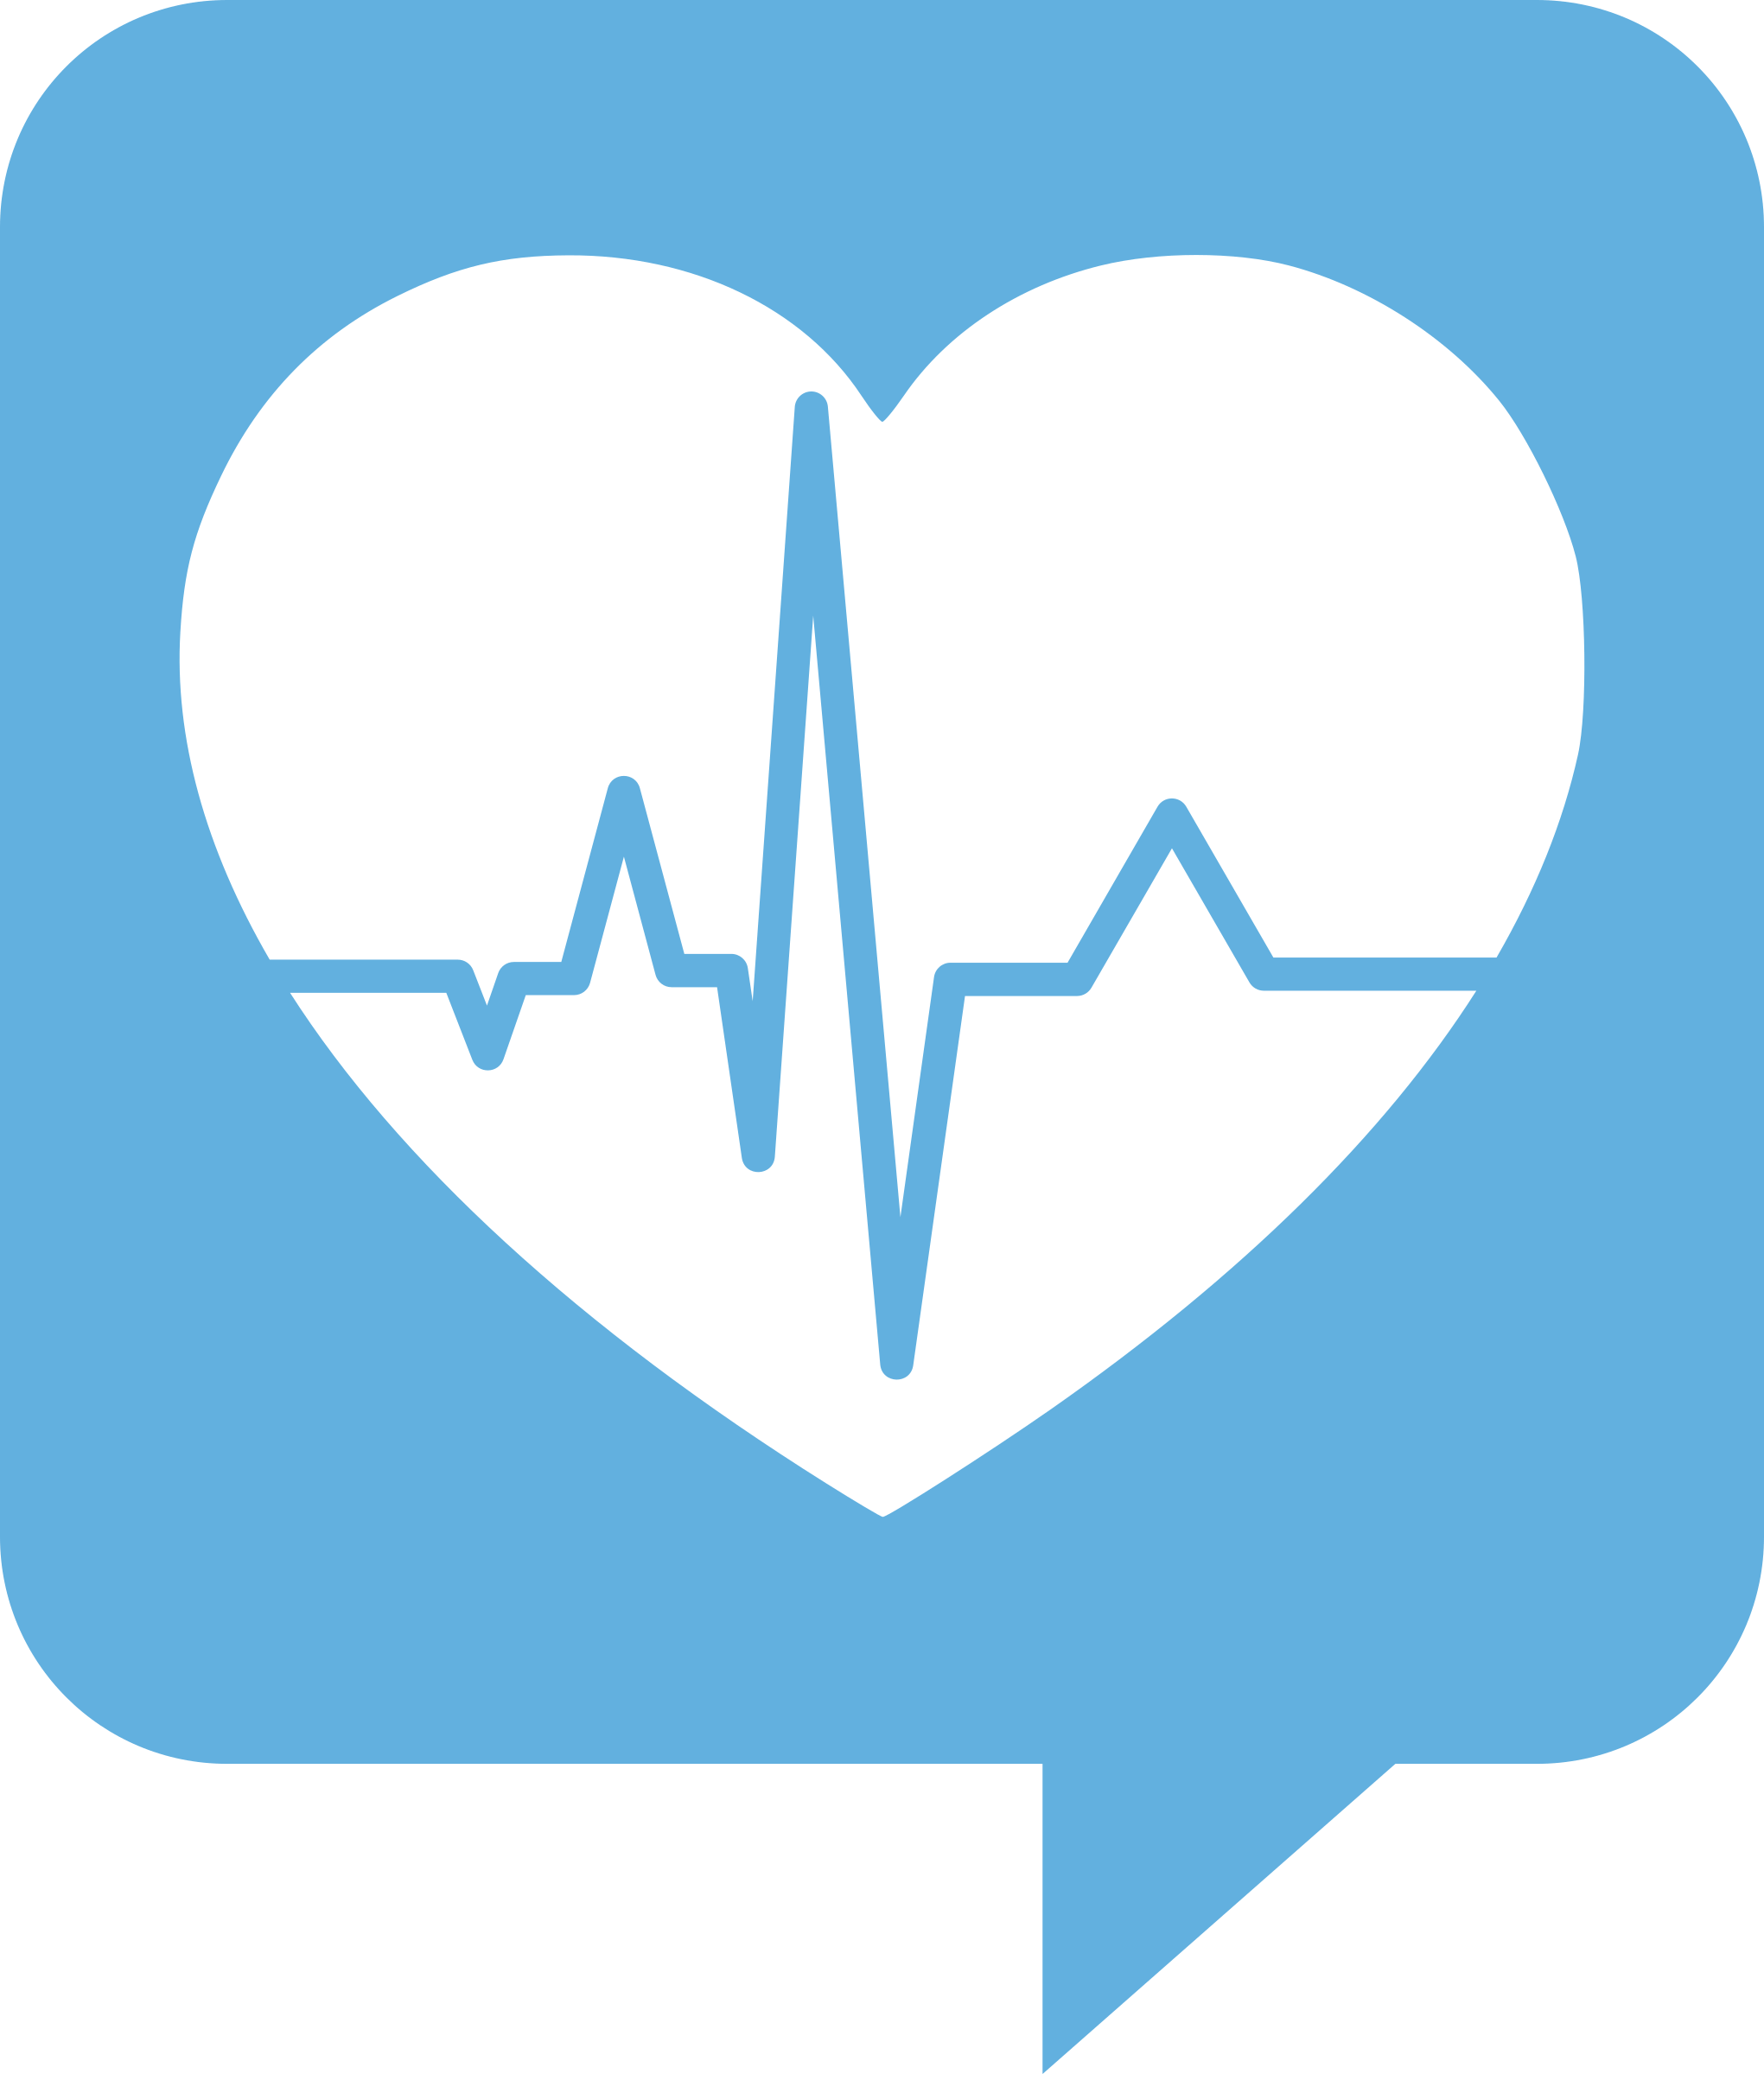 Heart Beat Logo - Clipart - Heartbeat Logo for Health.SE. No background. White heart